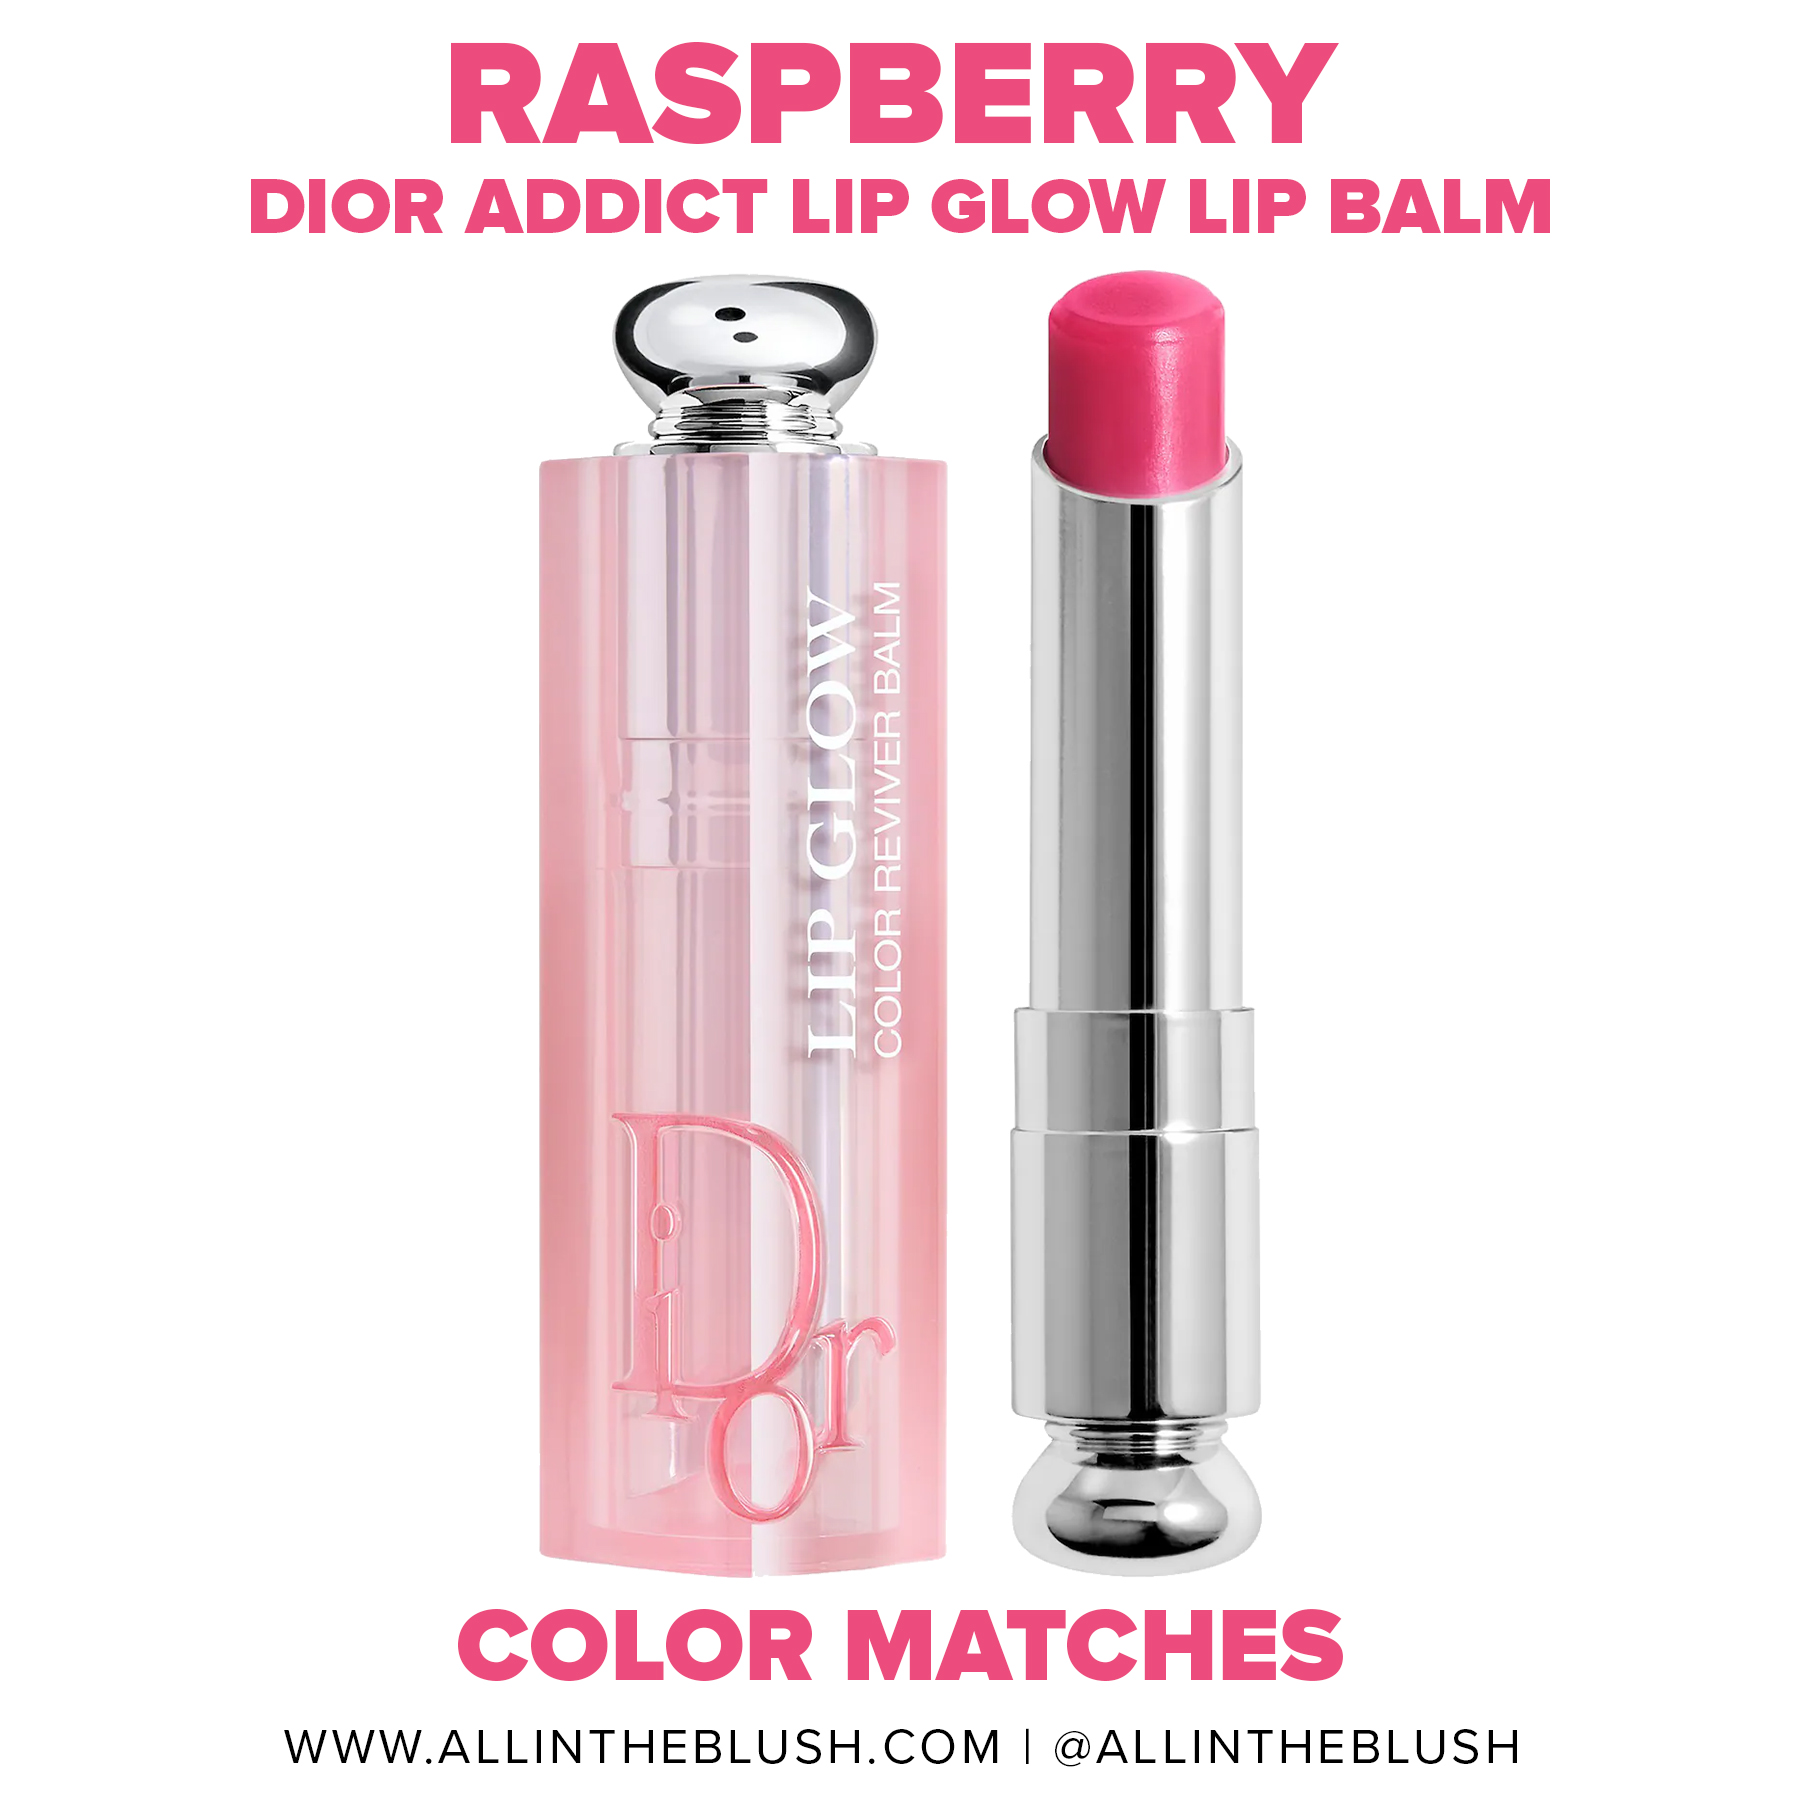 Dior Raspberry Addict Lip Glow Lip Balm Dupes - All In The Blush